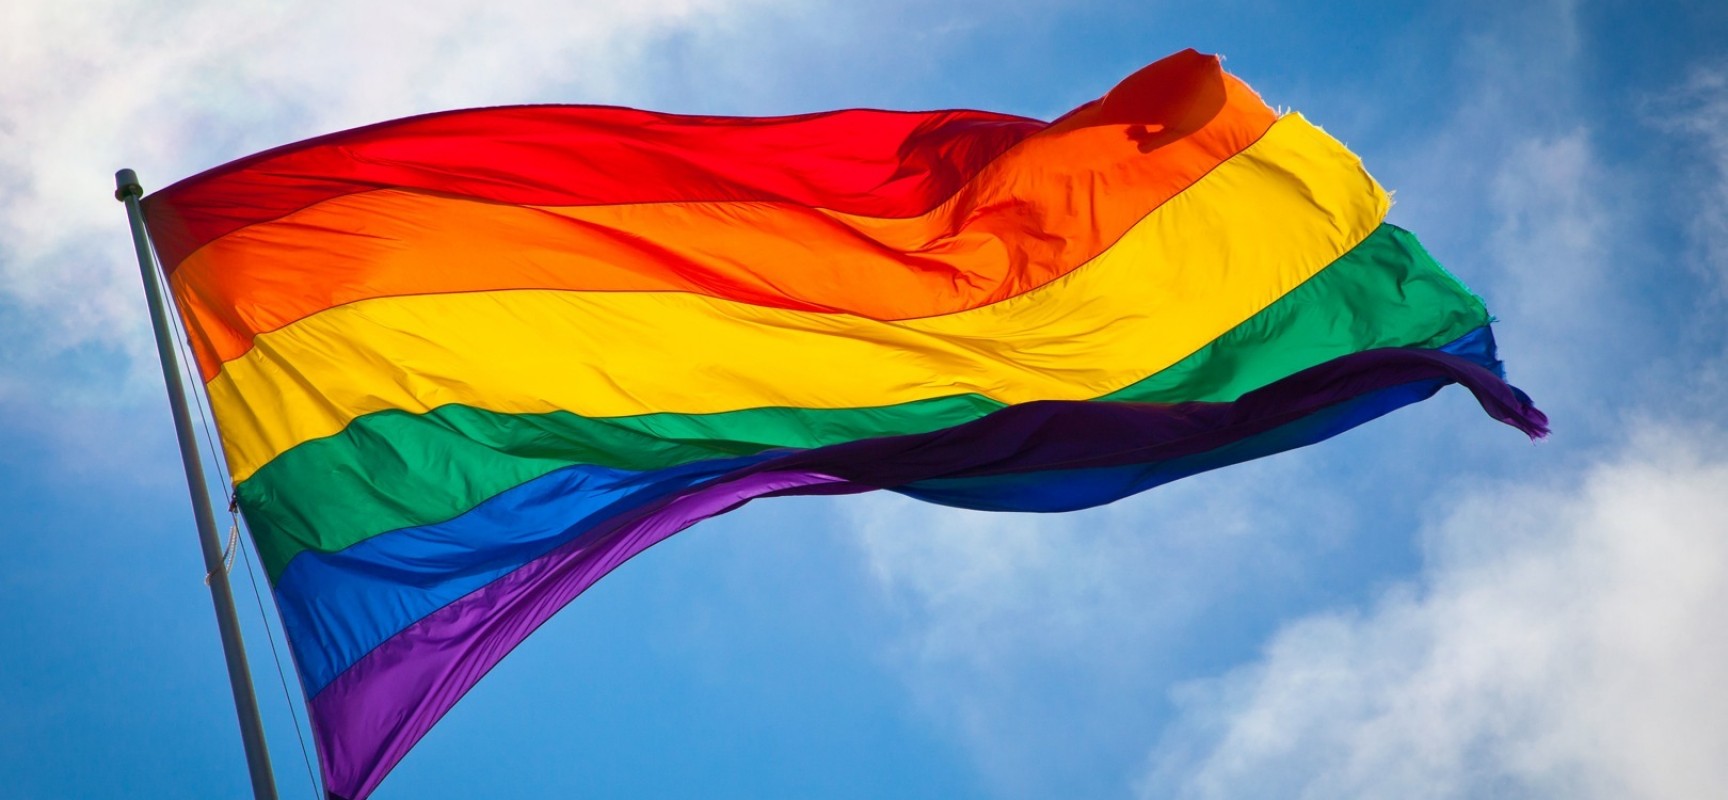 Bandiera gay_21 secolo_Martina Boselli